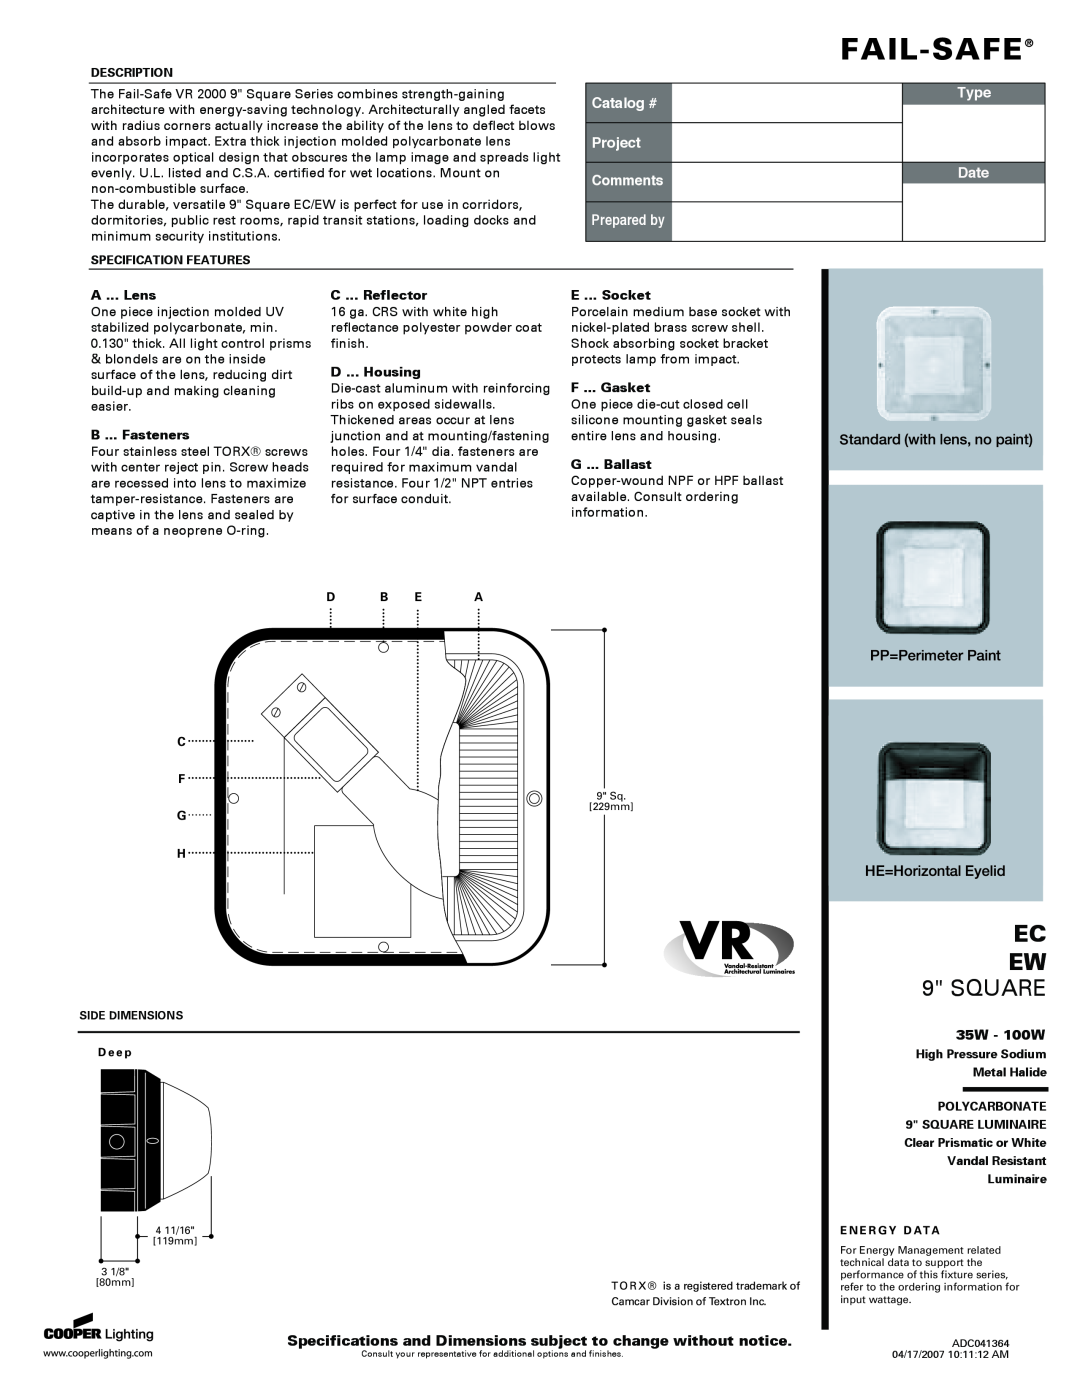 Cooper Lighting EC specifications 35W - 100W, A ... Lens, B ... Fasteners, C ... Reflector, D ... Housing, E ... Socket 